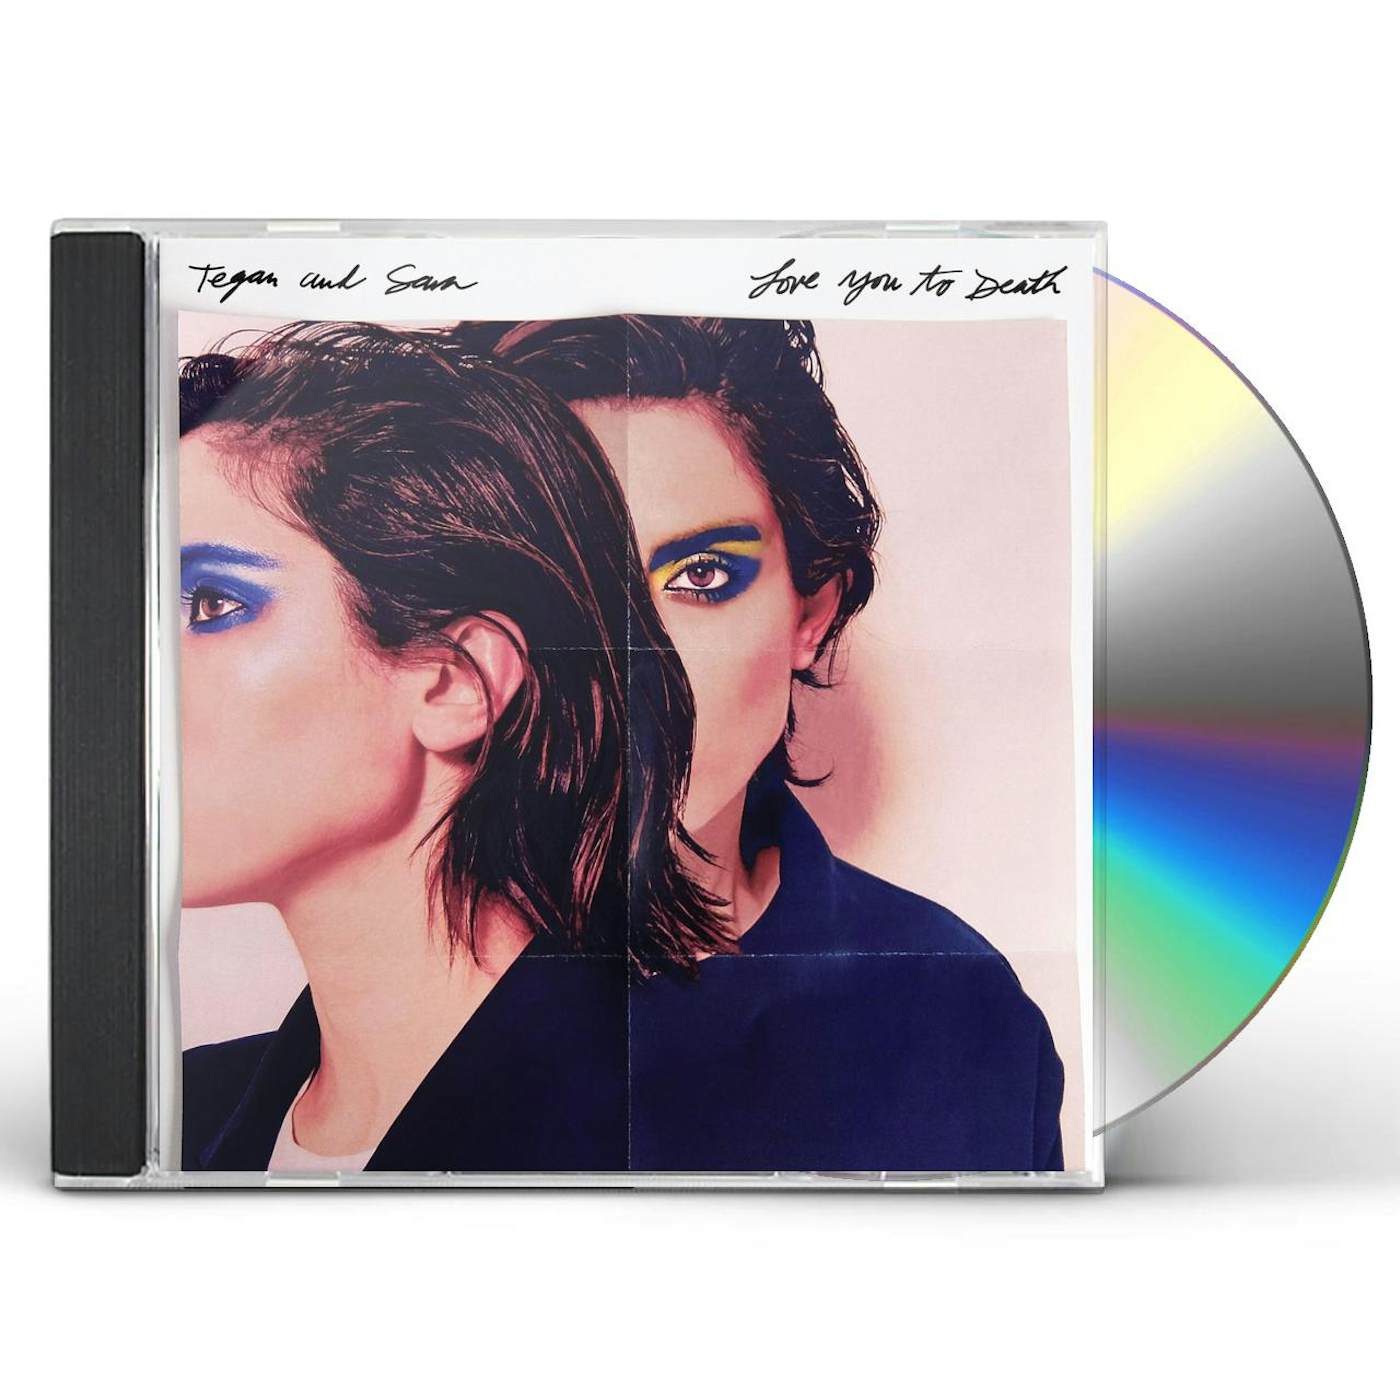 Tegan and Sara LOVE YOU TO DEATH CD